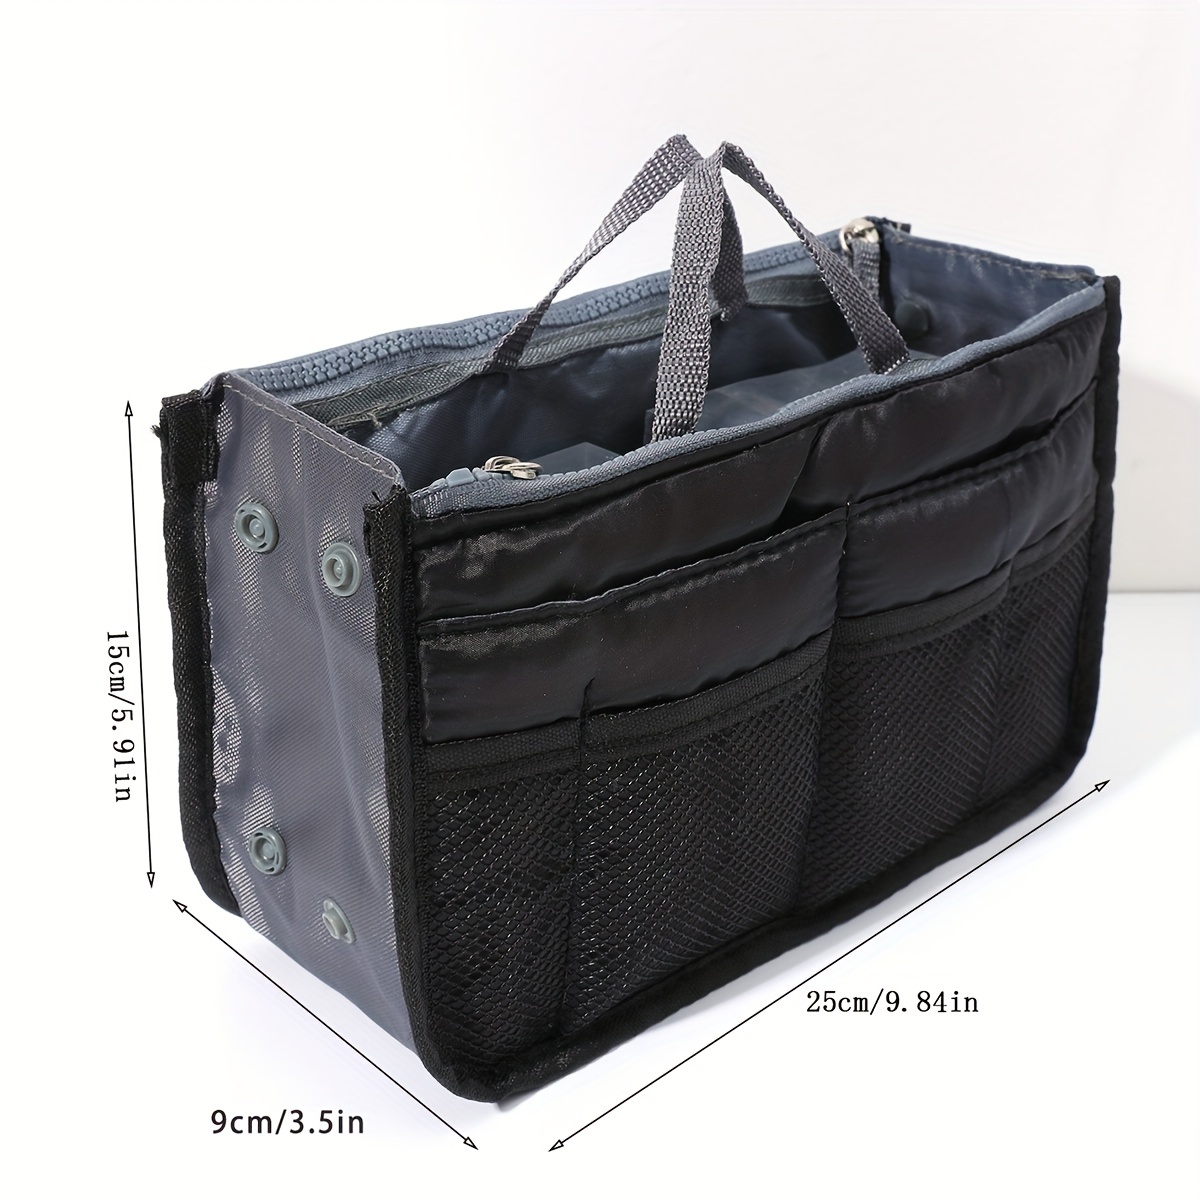 Purse Organizer Insert, Bag Organizer For Tote Purse, Bag In Bag 24*13*15cm